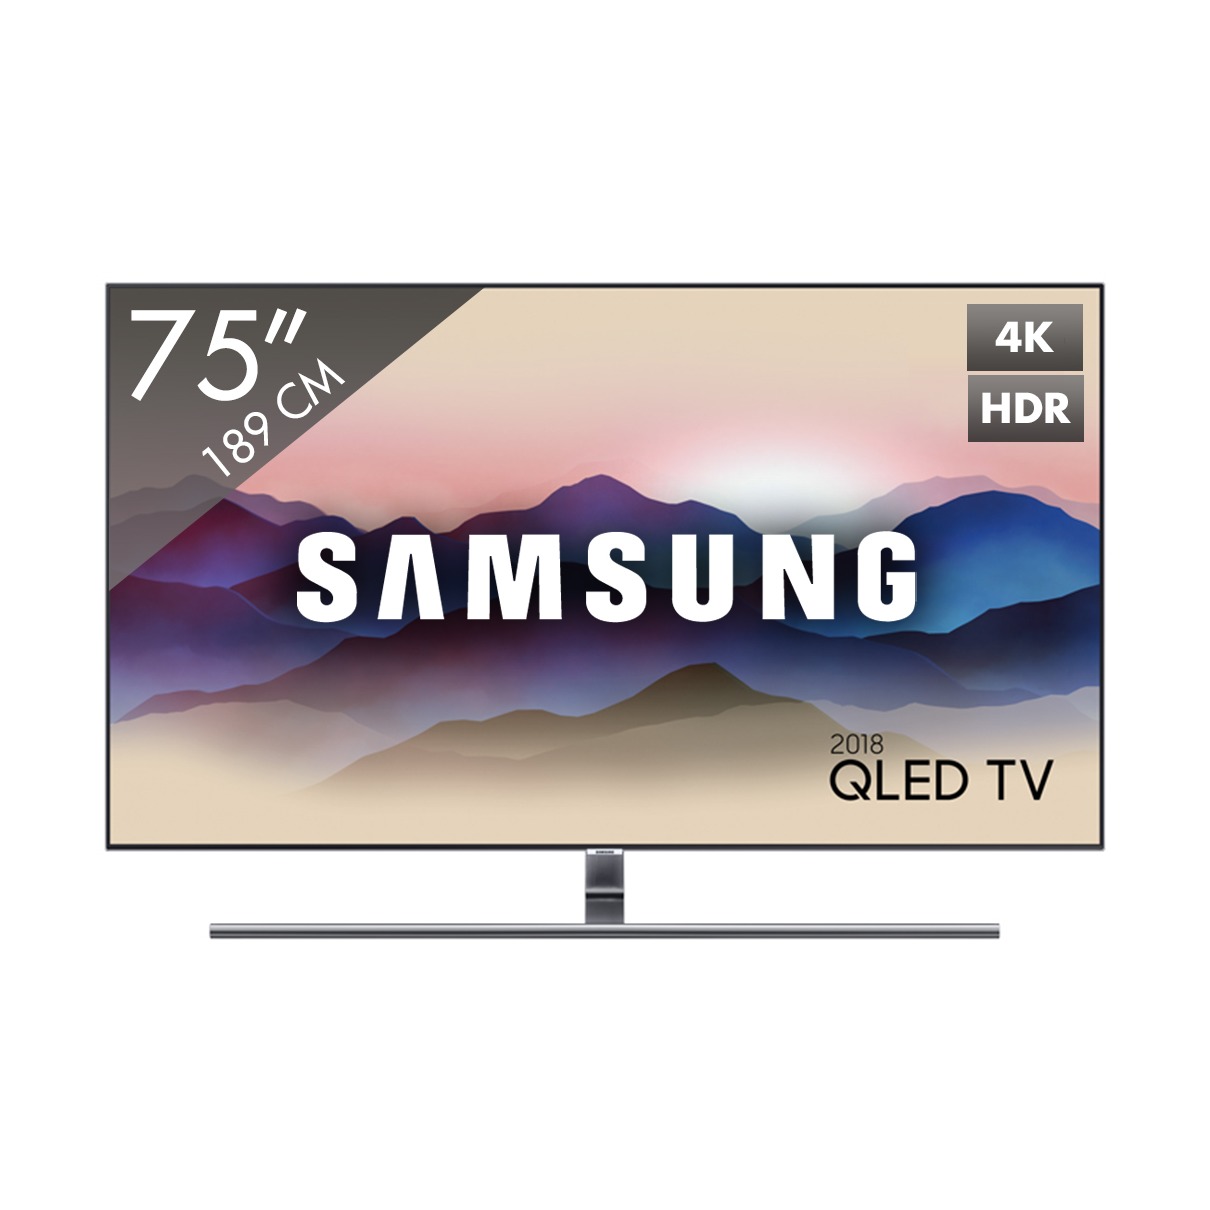 Telefoonleader - Samsung QE75Q7F QLED TV 2018